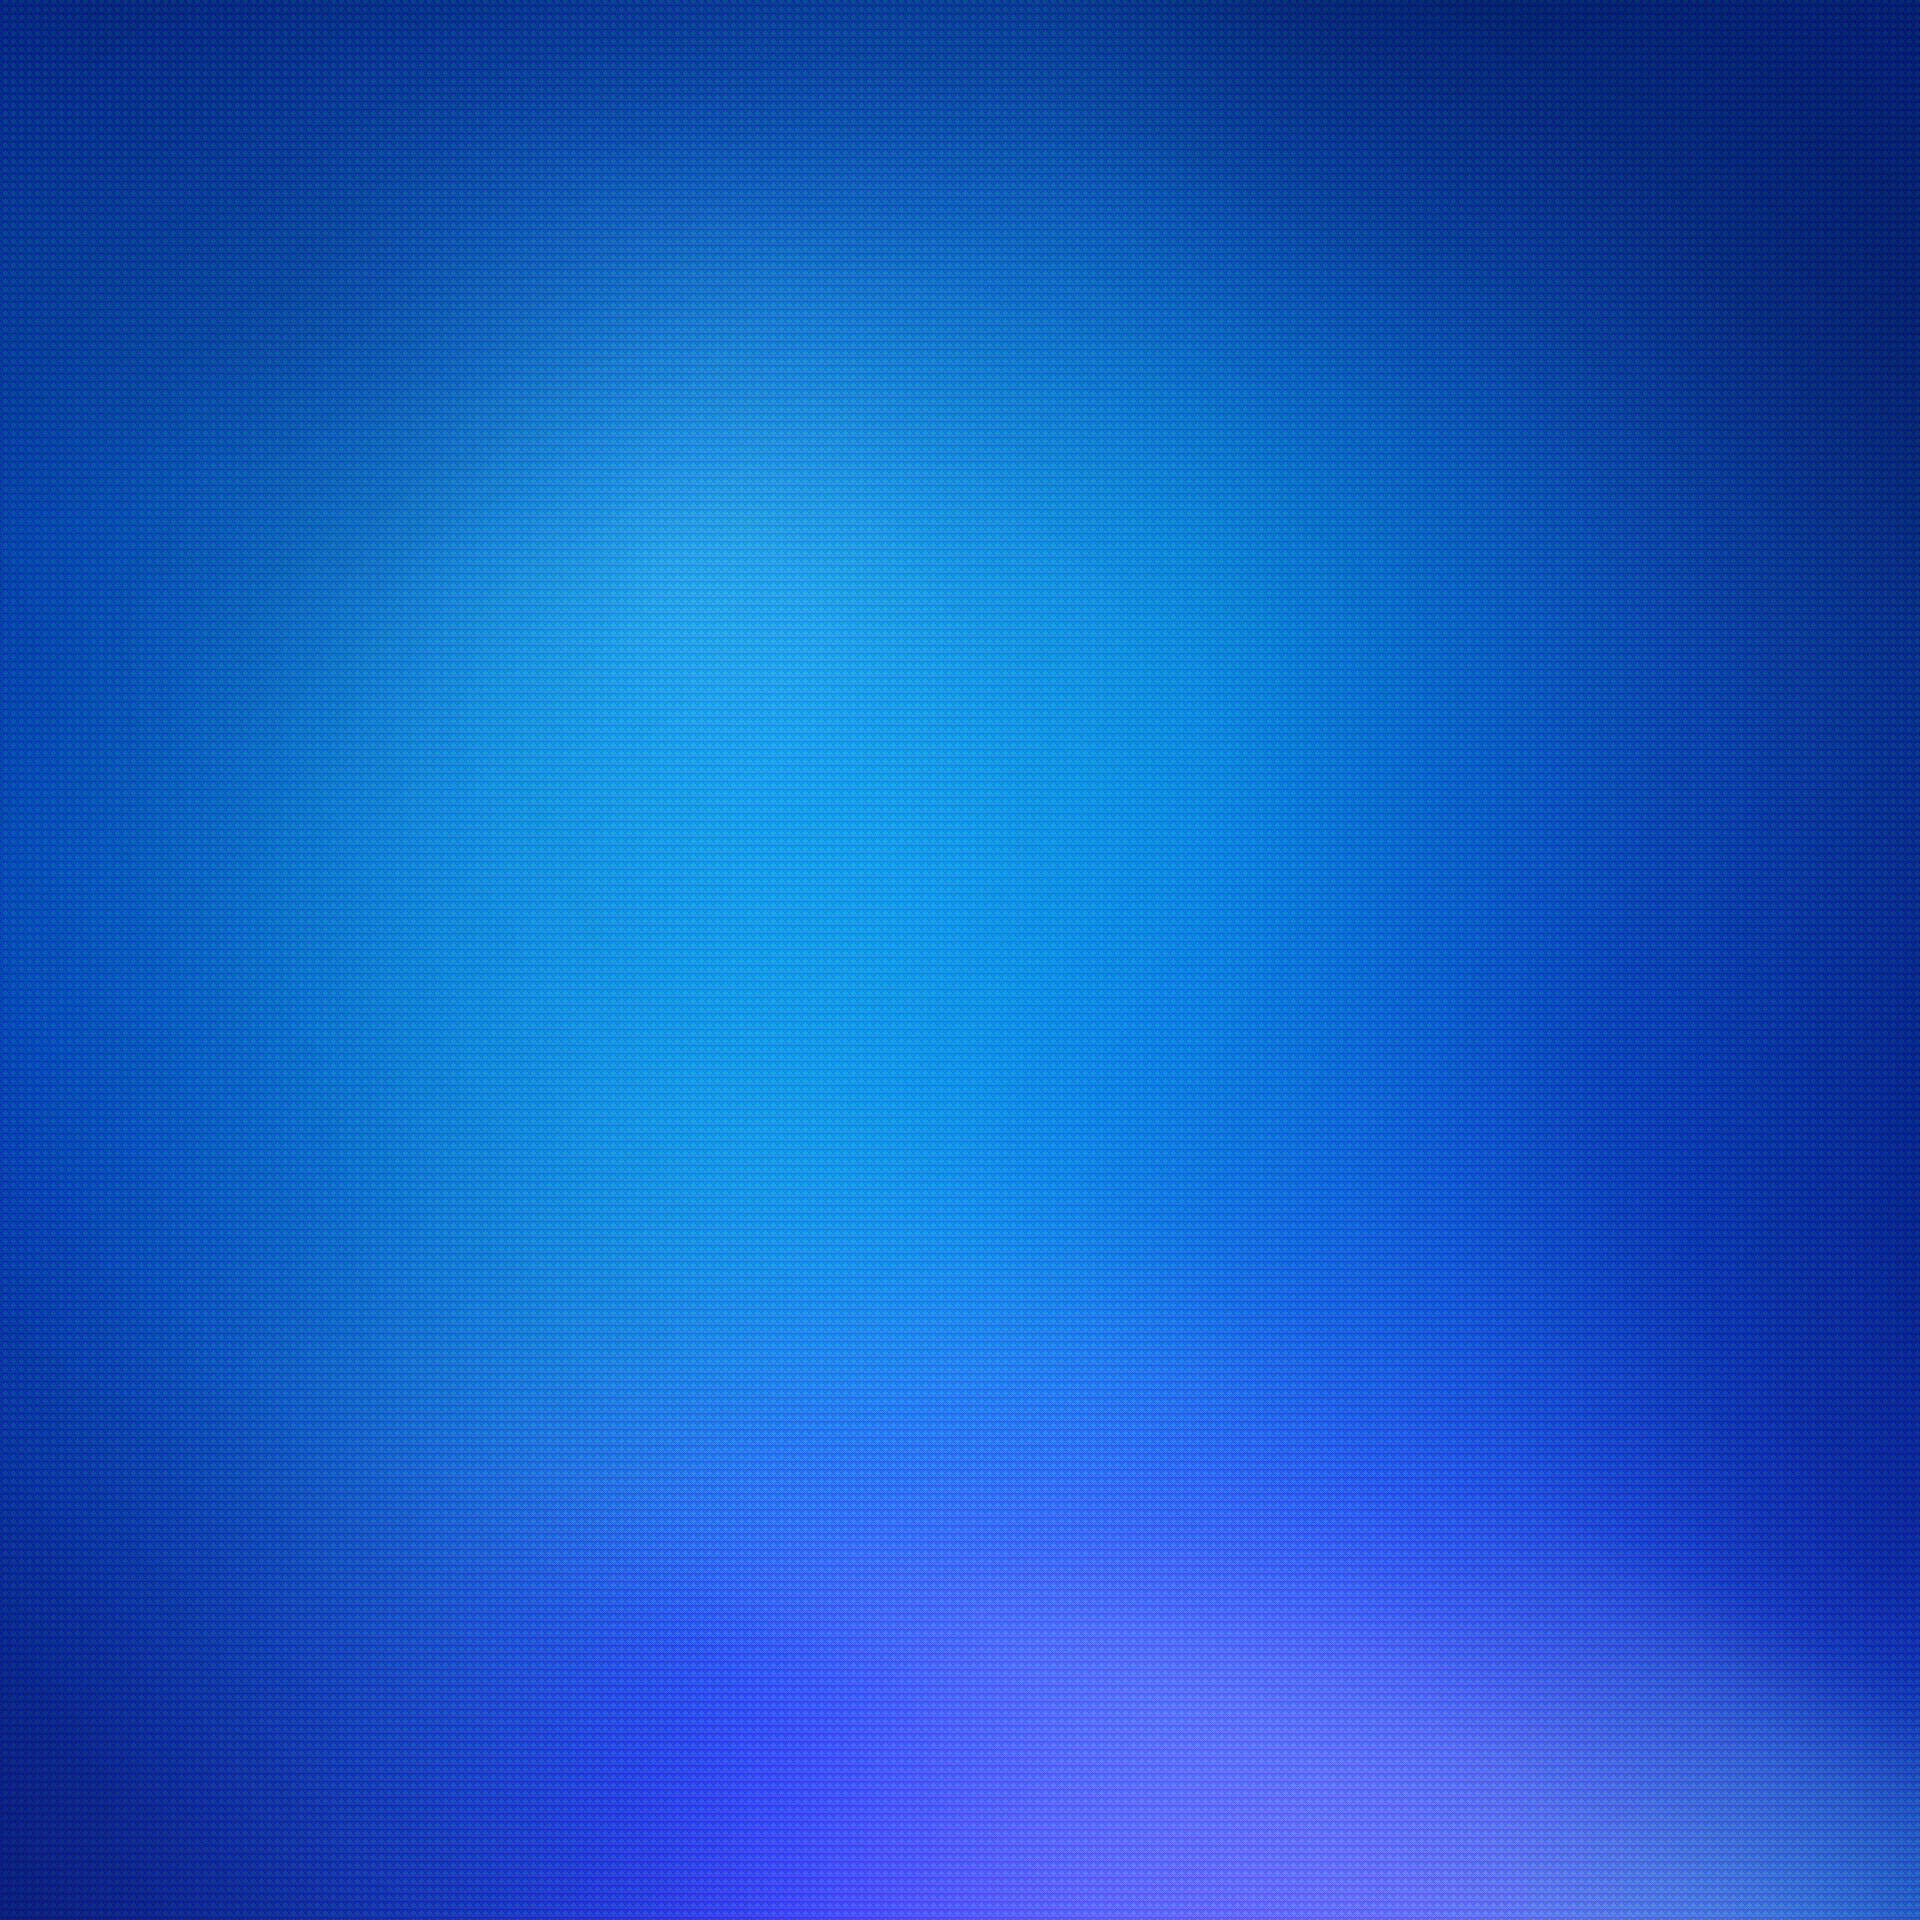 Galaxy Note 3 Stock - HD Wallpaper 